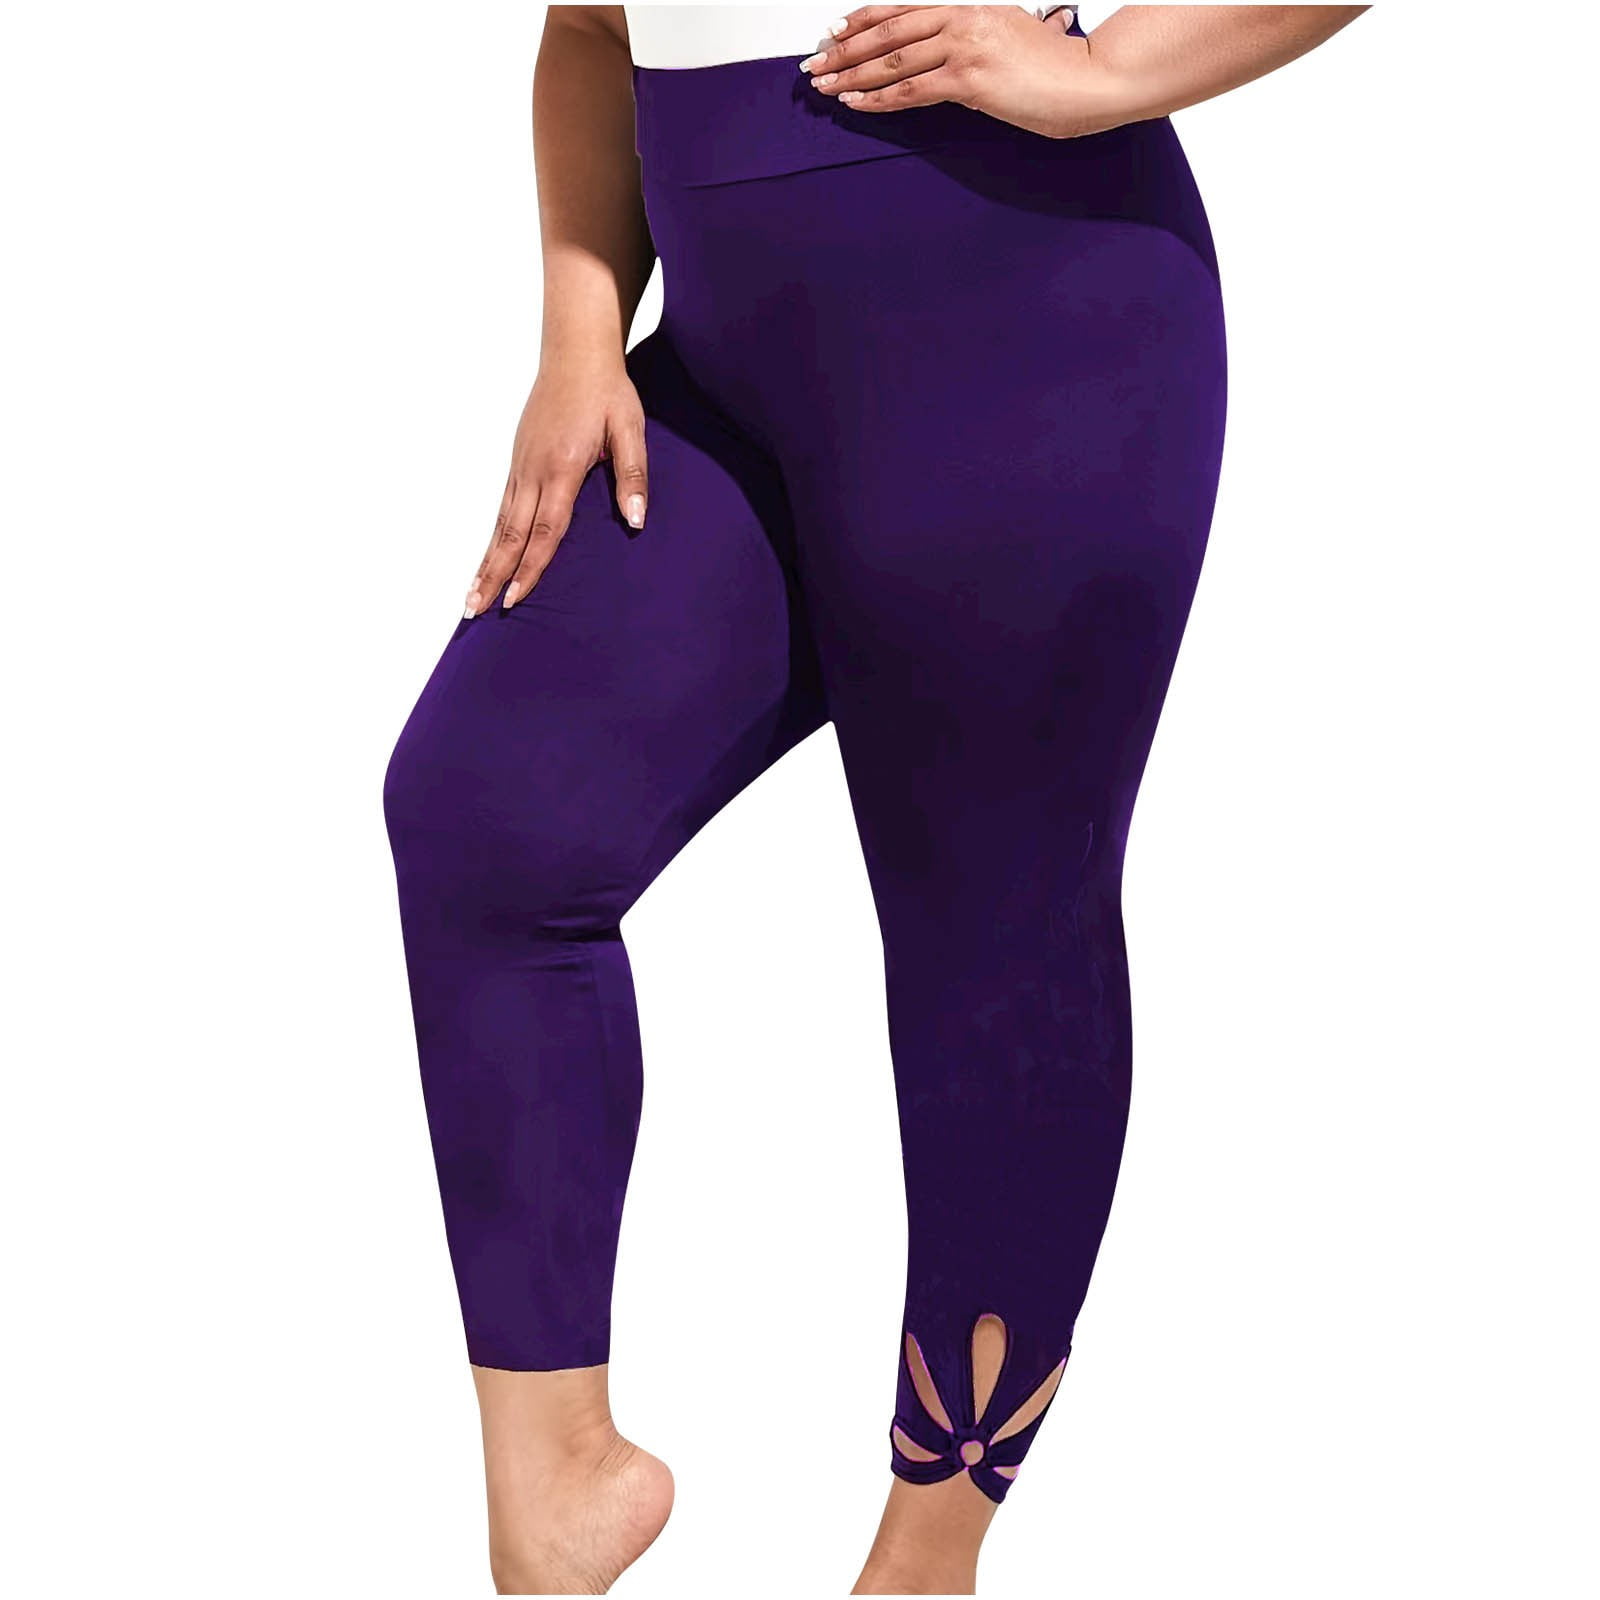 Plus Size Spandex Leggings Womens High Waist Stretchy Flower Cut Out Bottom  Capri Legging Workout Yoga Pants (4X-Large, Purple) 